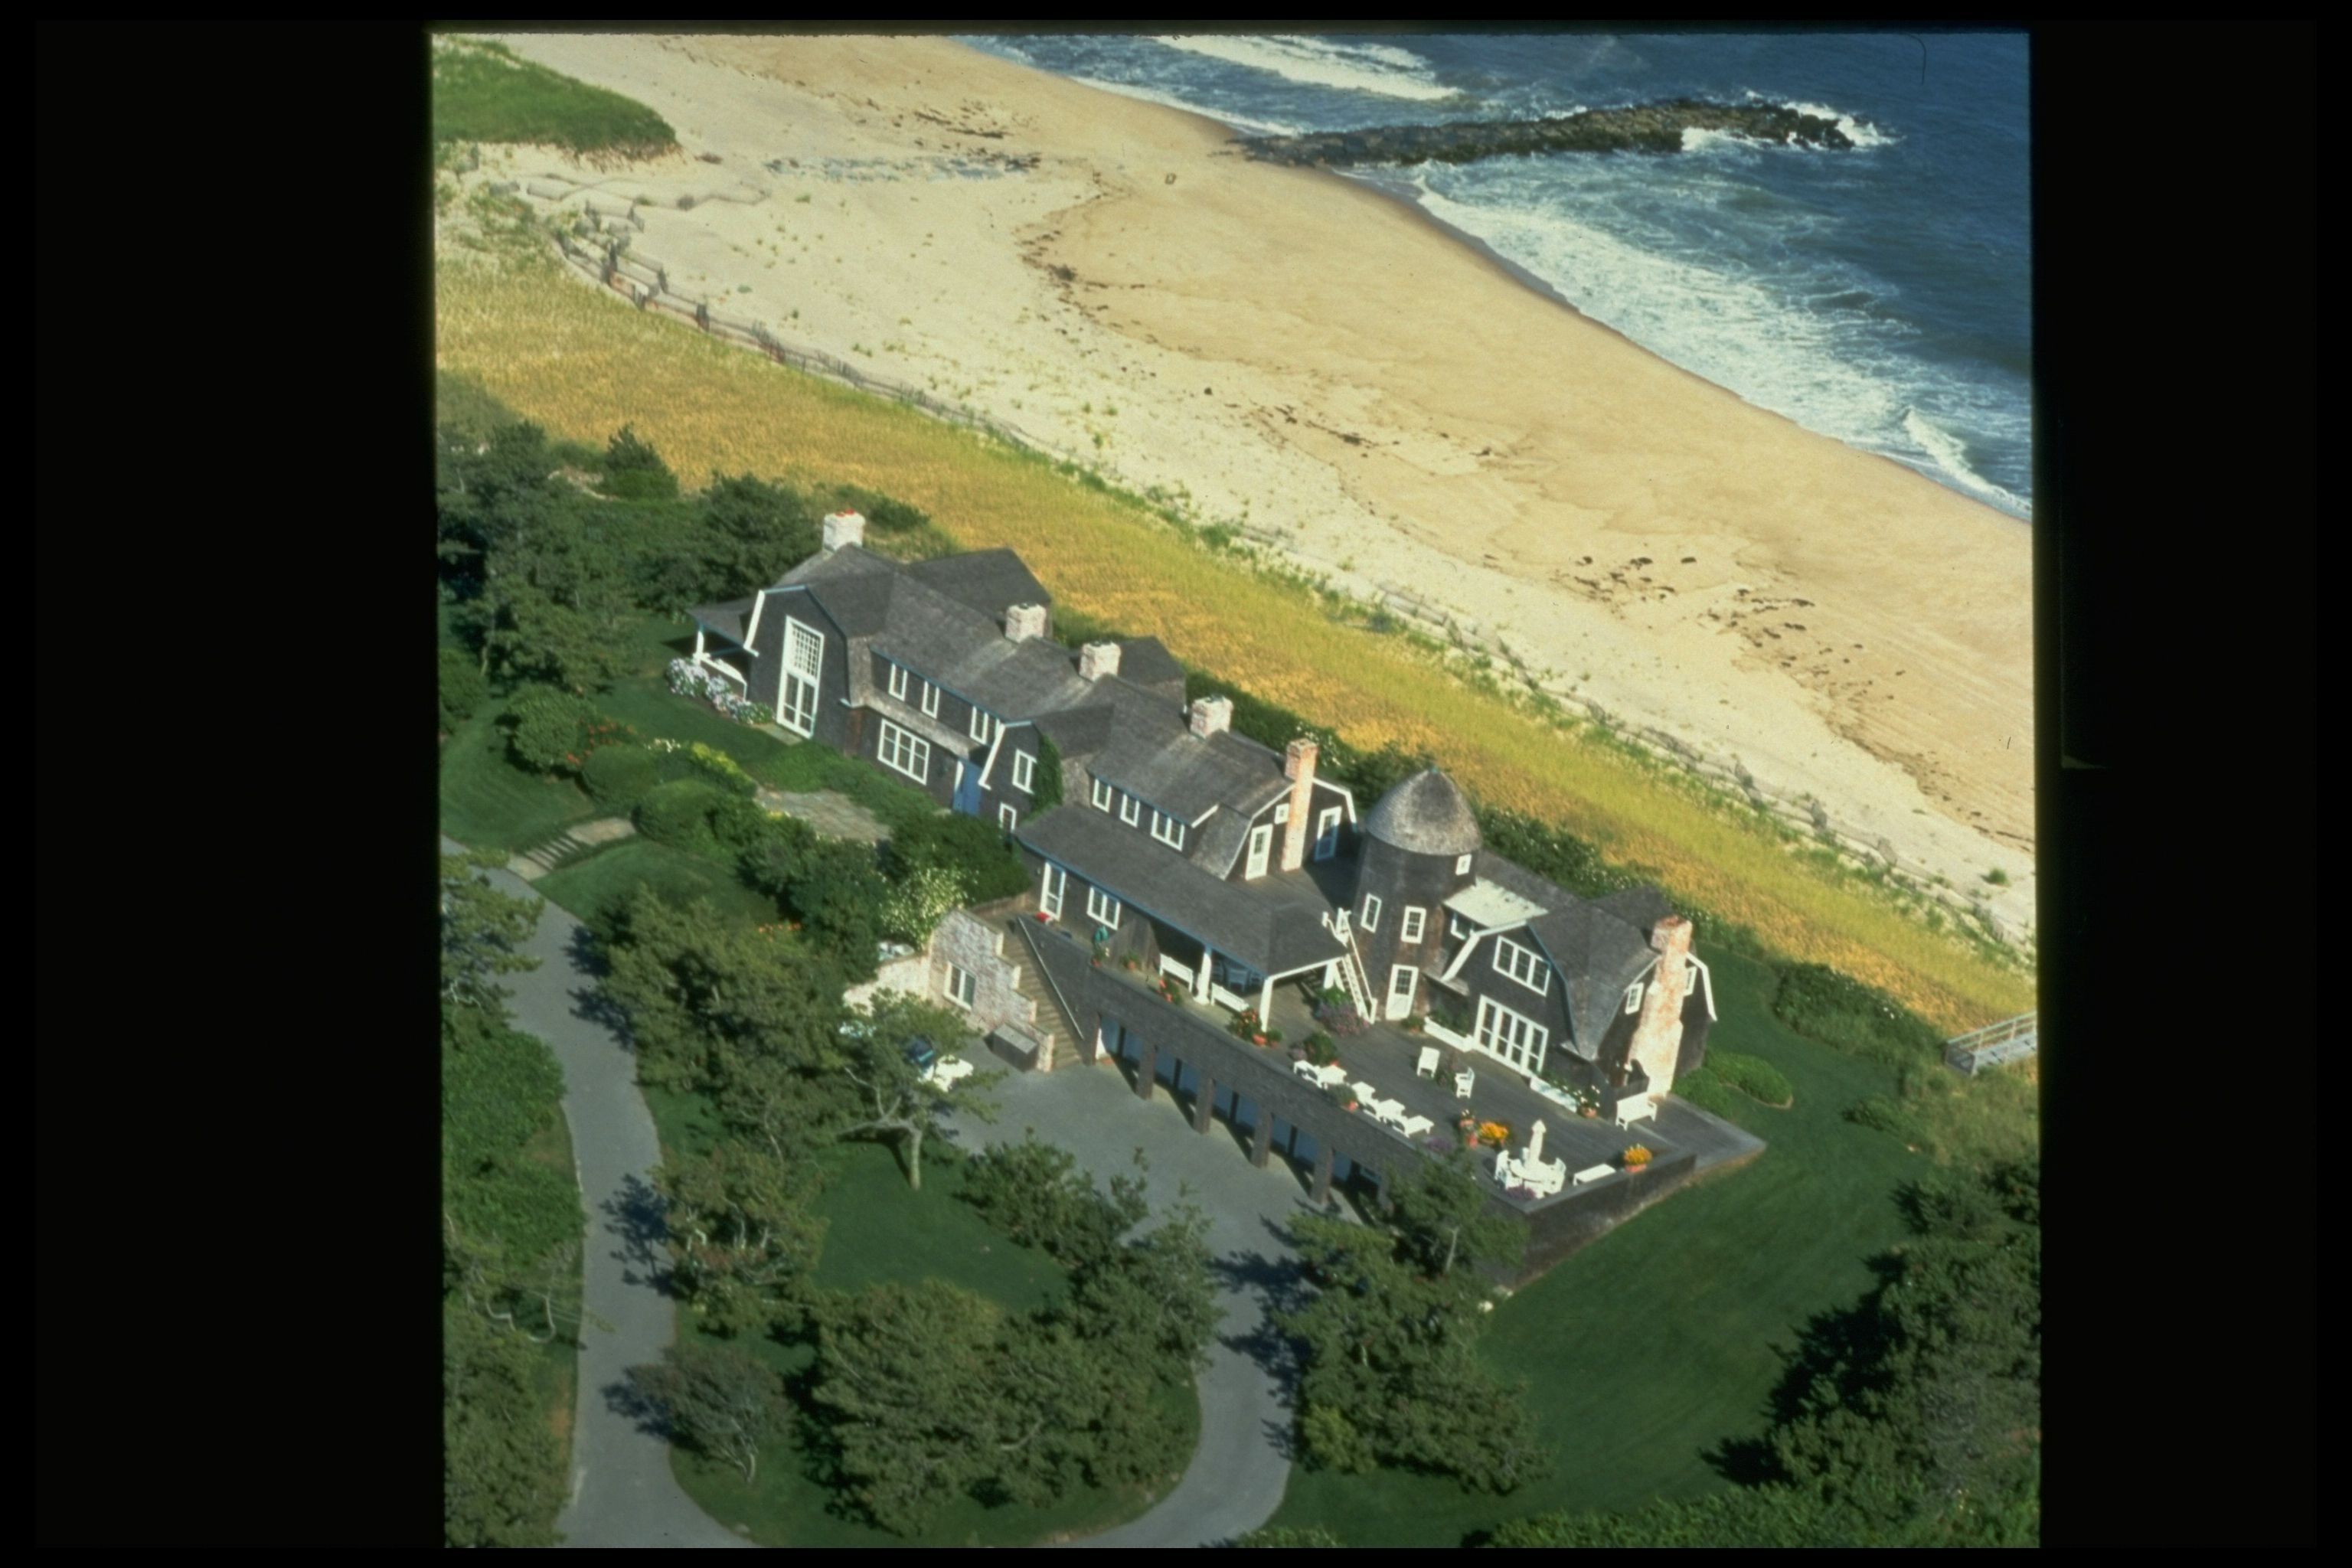 Calvin Klein Just Sold His East Hampton Estate for $85 Million